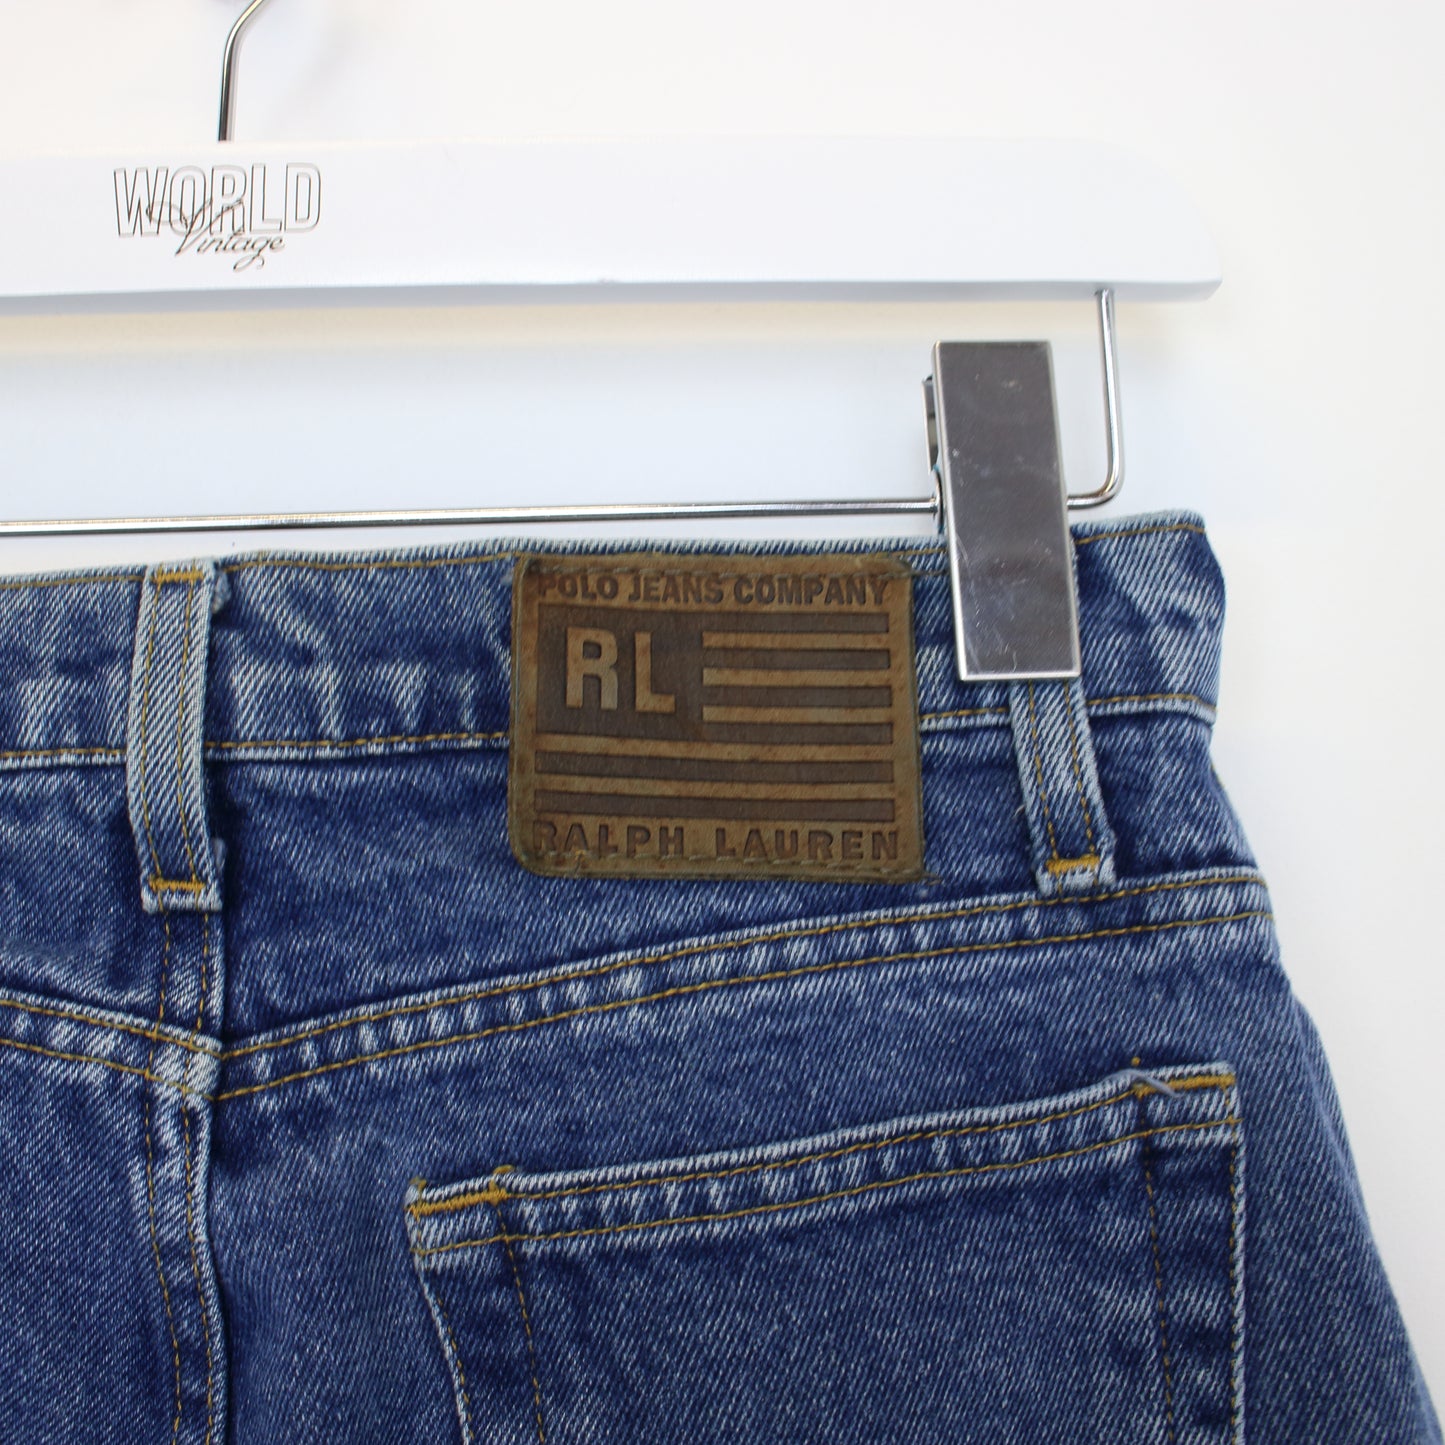 Vintage Polo Ralph Lauren jeans in blue. Best fits W27 L30